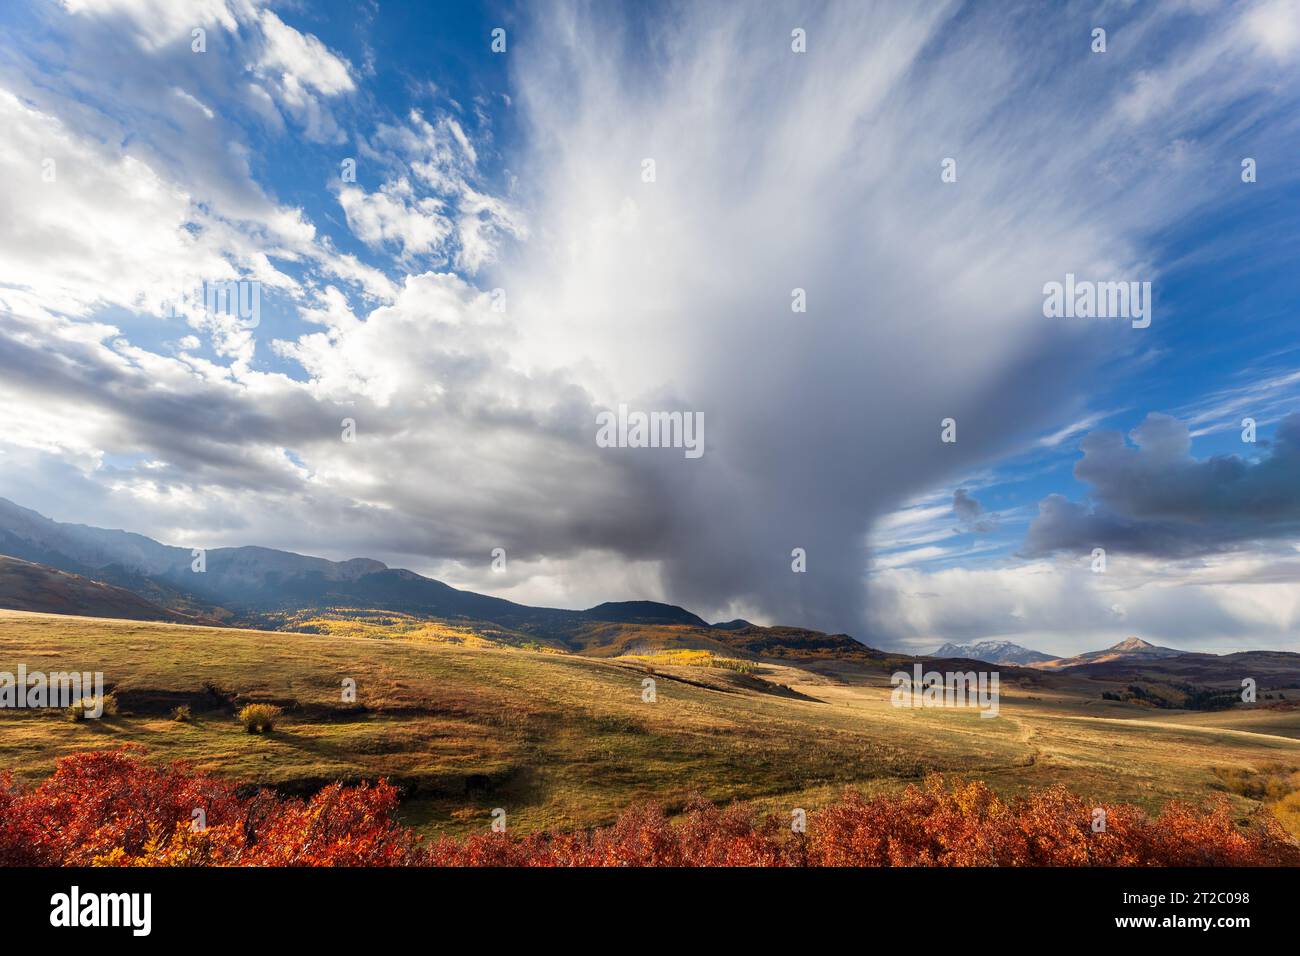 Warn sunlight on fall colors in the San Juan Mountains along Last Dollar Road near Telluride, Colorado Stock Photo